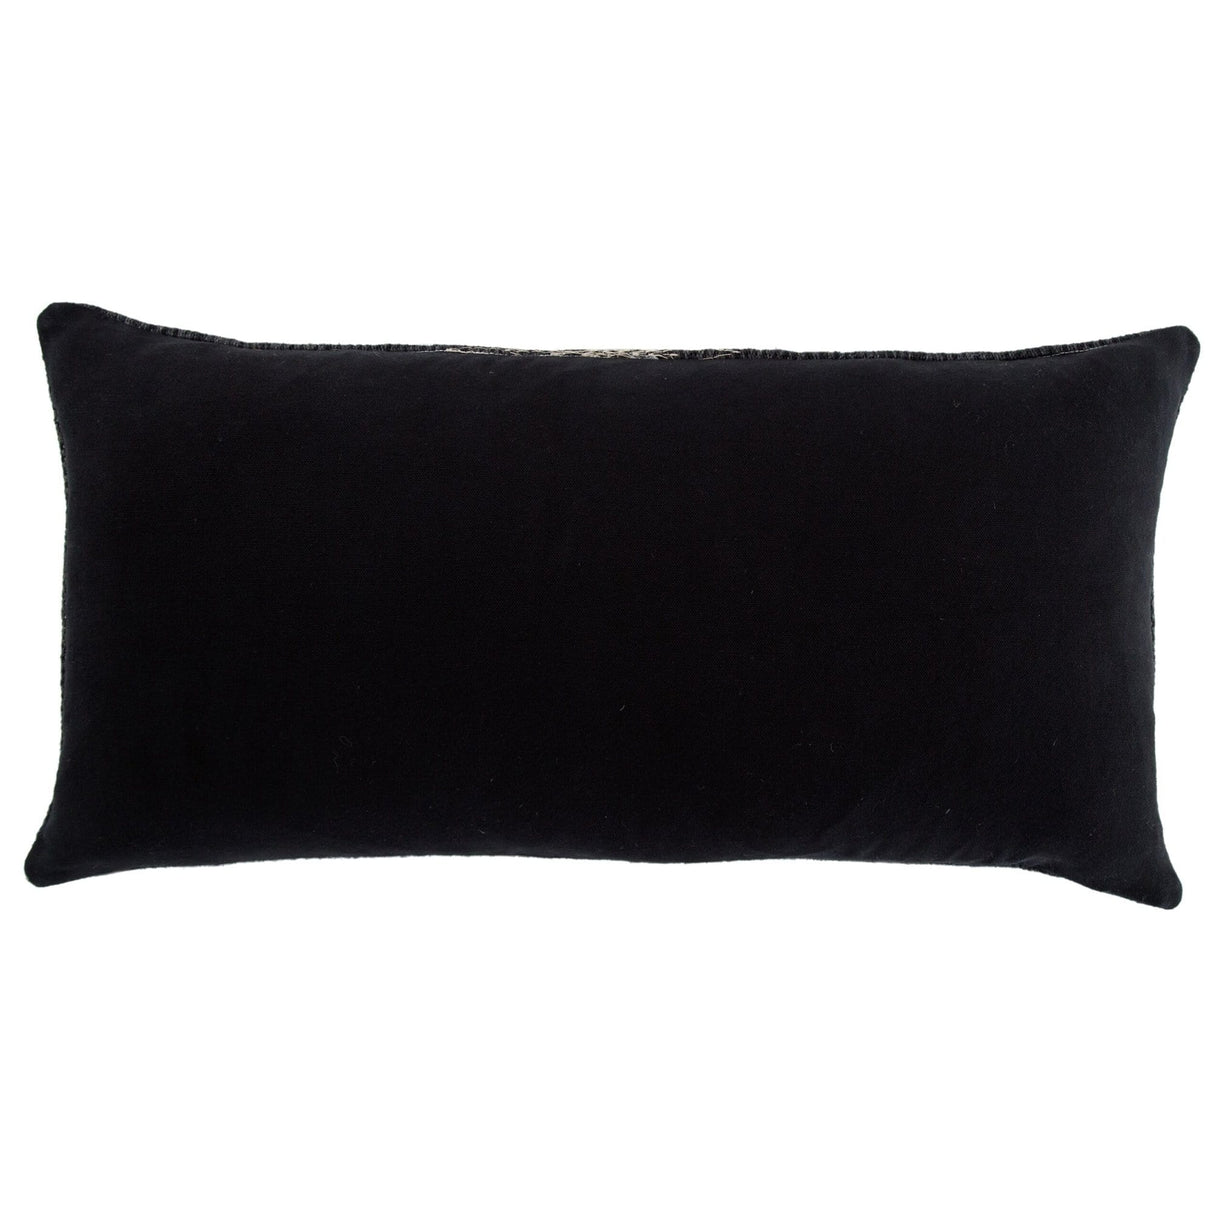 Jaipur Living Mercado Aravalli Ombre Black/ Gray Polyester Throw Pillow Pillow & Decor